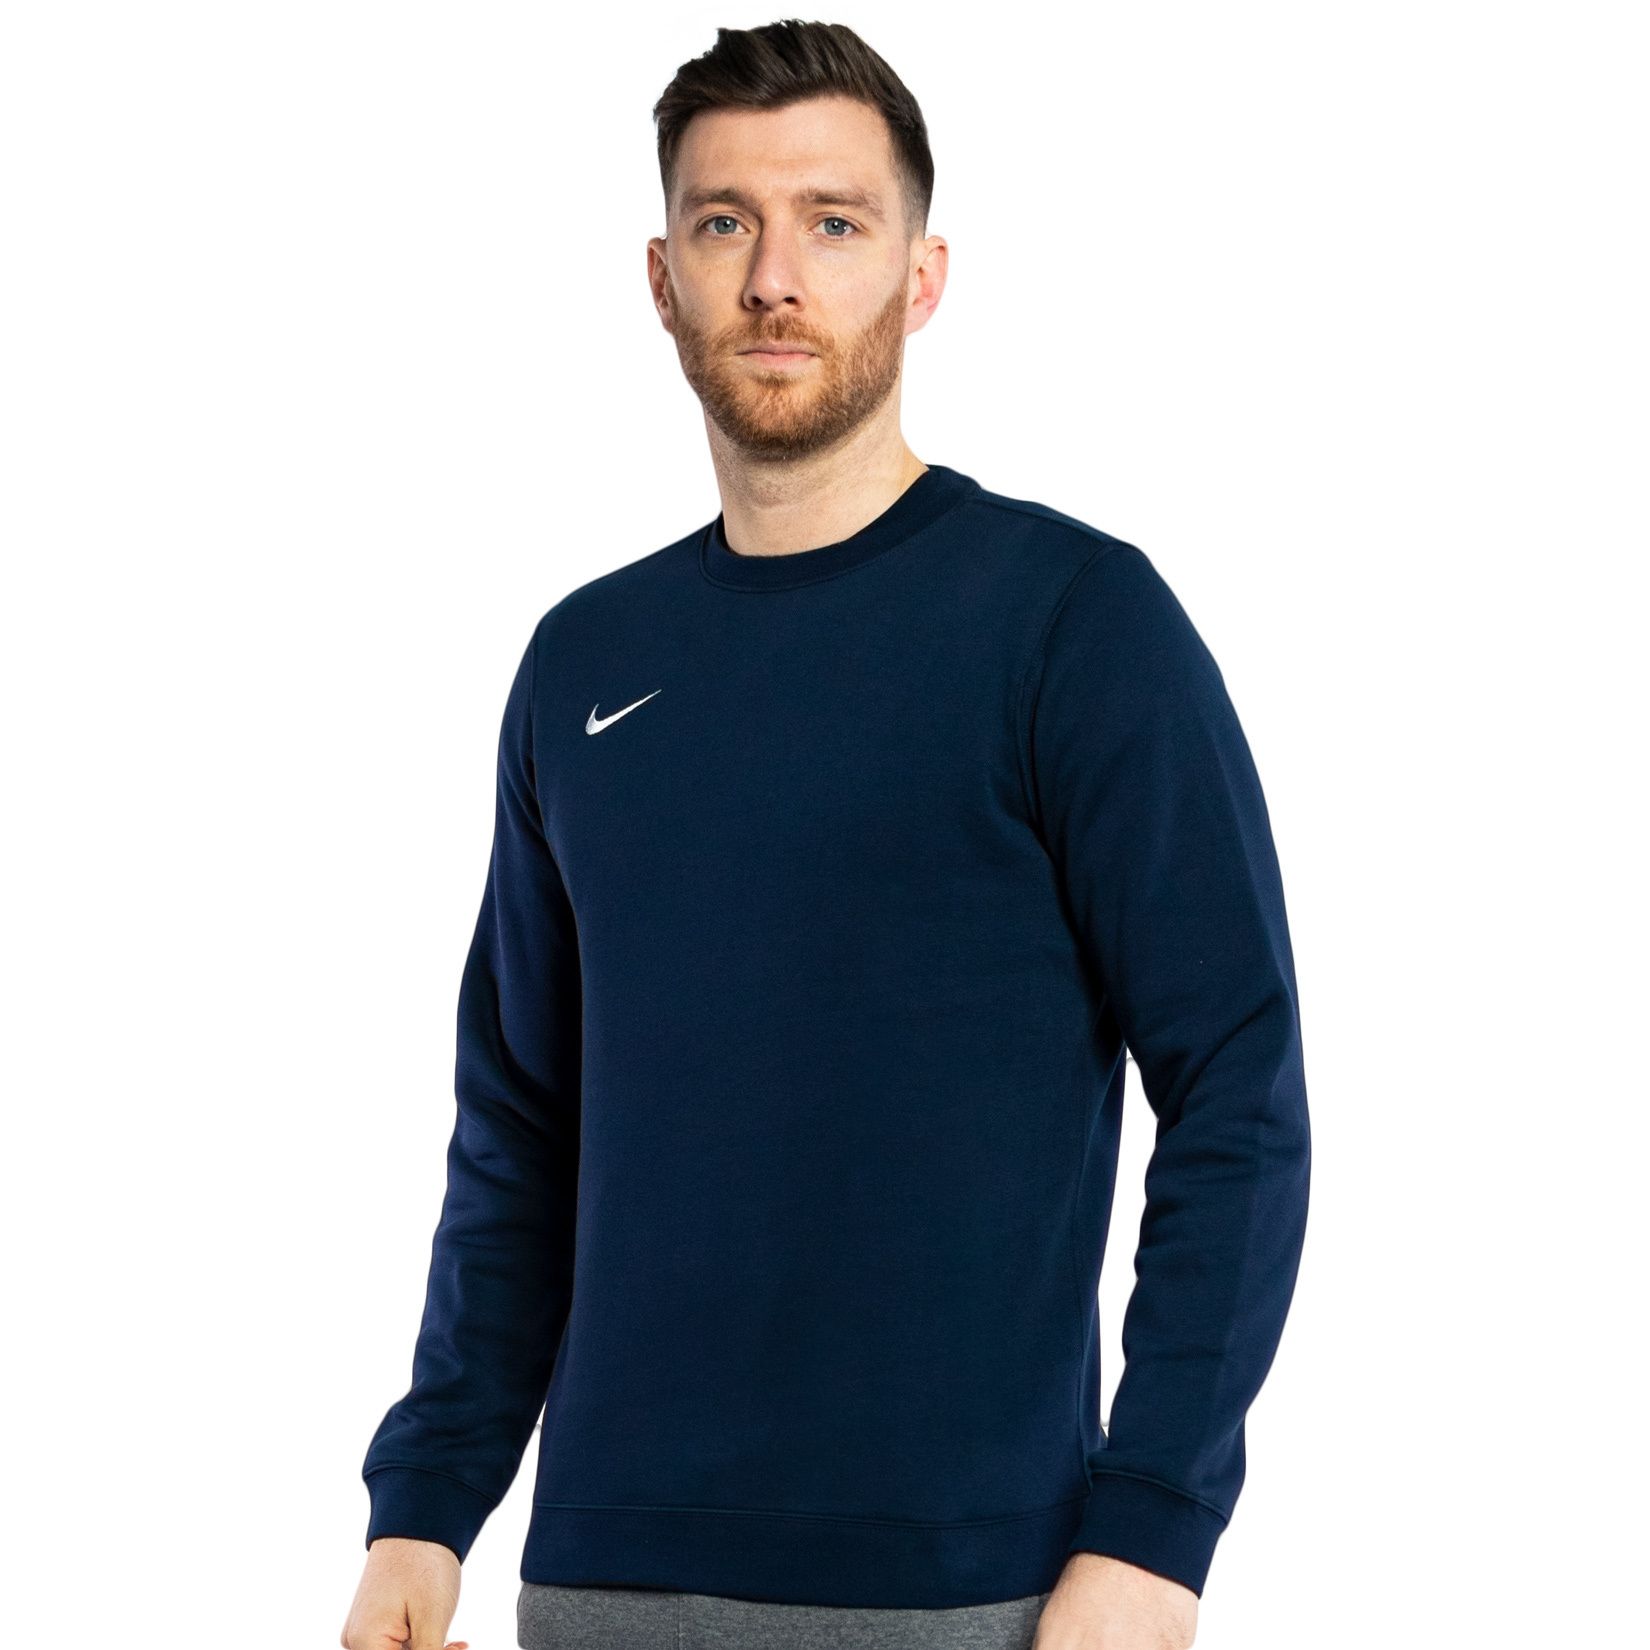 Nike Team Club 19 Crew Sweatshirt Discount Sale, UP TO 51% OFF |  www.apmusicales.com